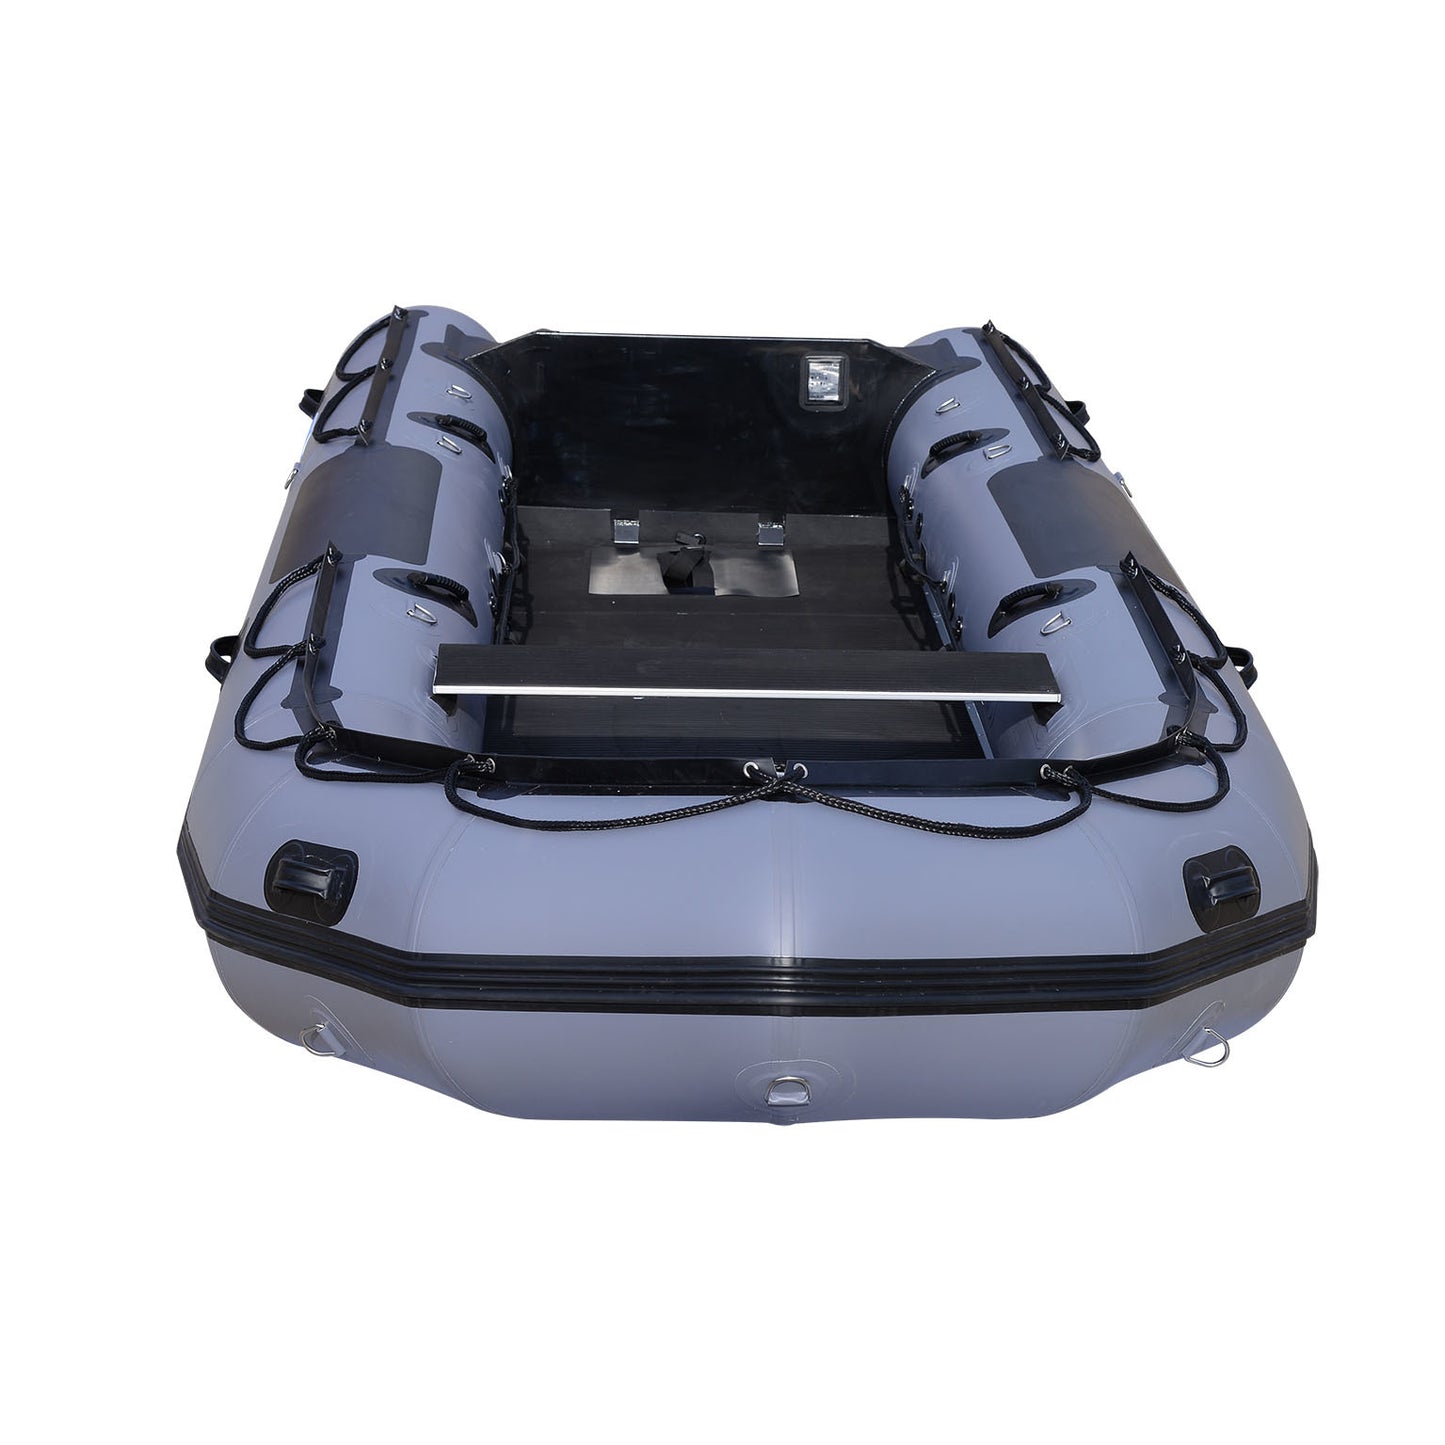 BRIS Assault Full Aluminium 1.2mm PVC 14.5 ft Inflatable Boat Inflatable Fishing Pontoon Dinghy Boat